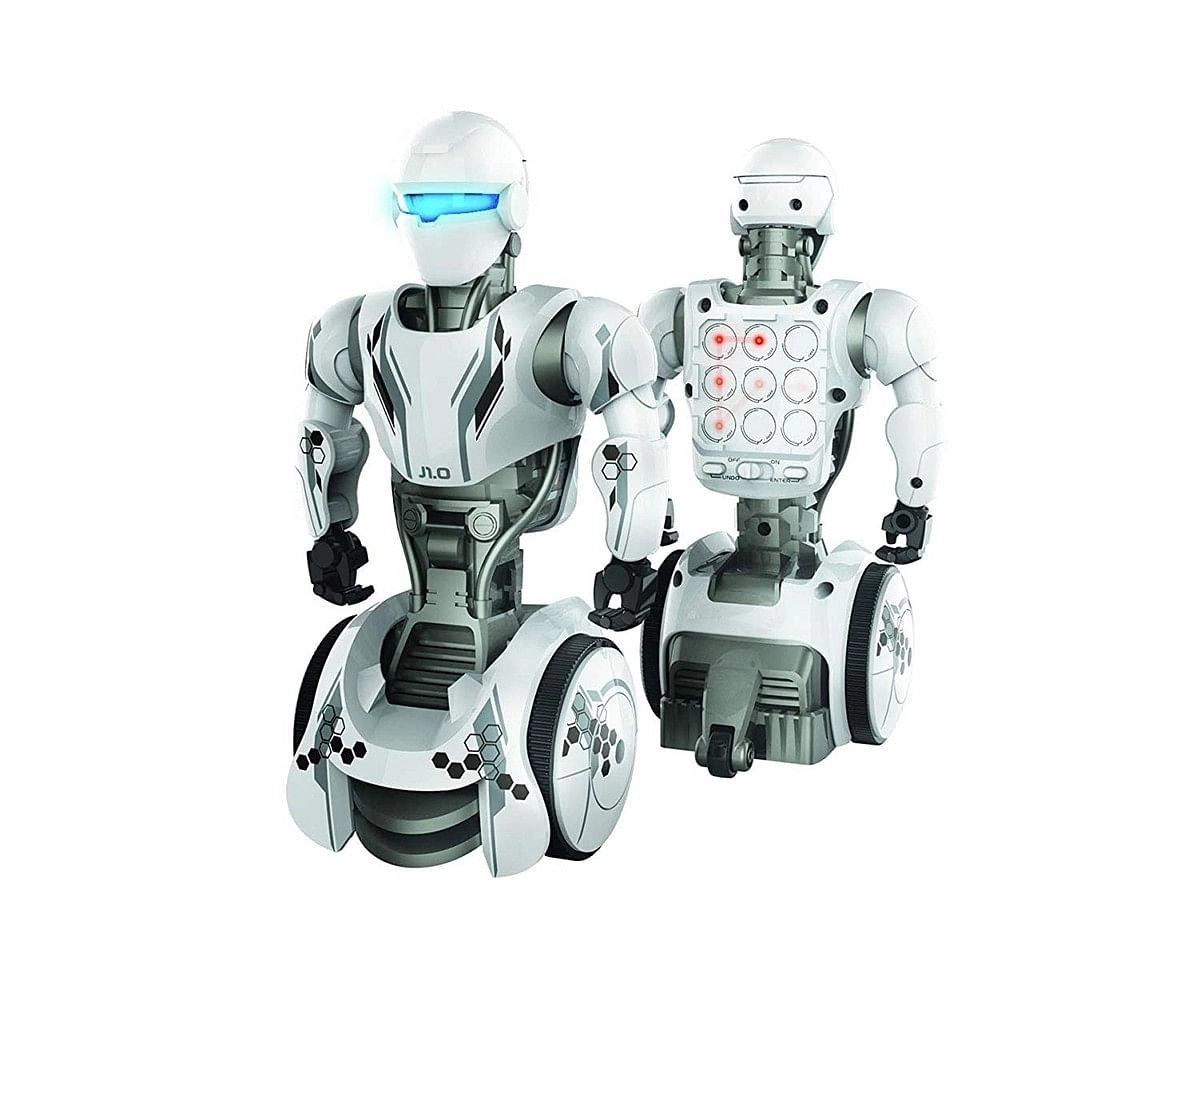 Silverlit Ycoo Junior 1.0 Robot-White Robotics for Kids age 5Y+ (White)